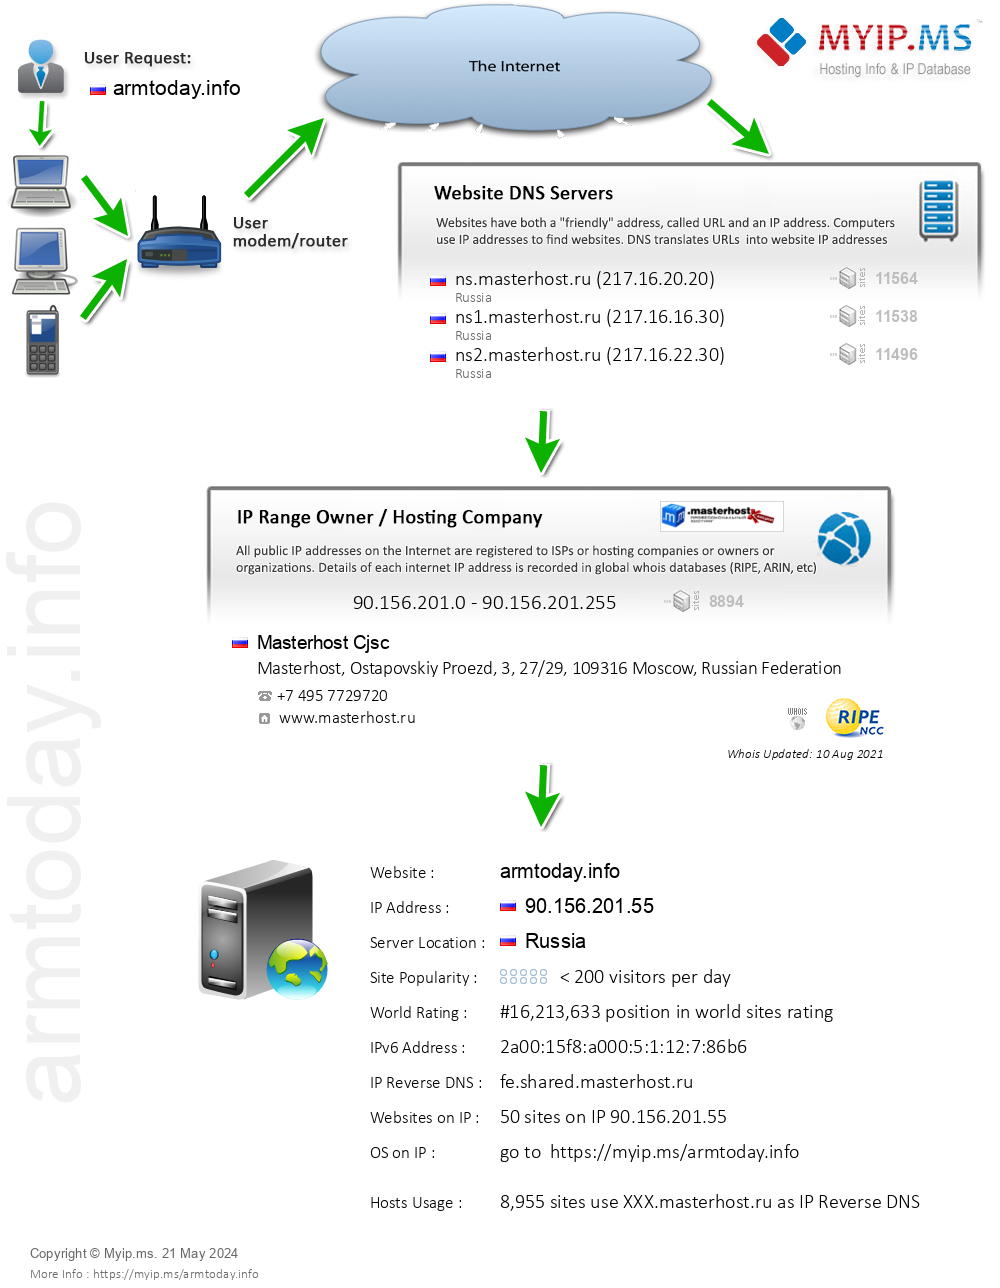 Armtoday.info - Website Hosting Visual IP Diagram